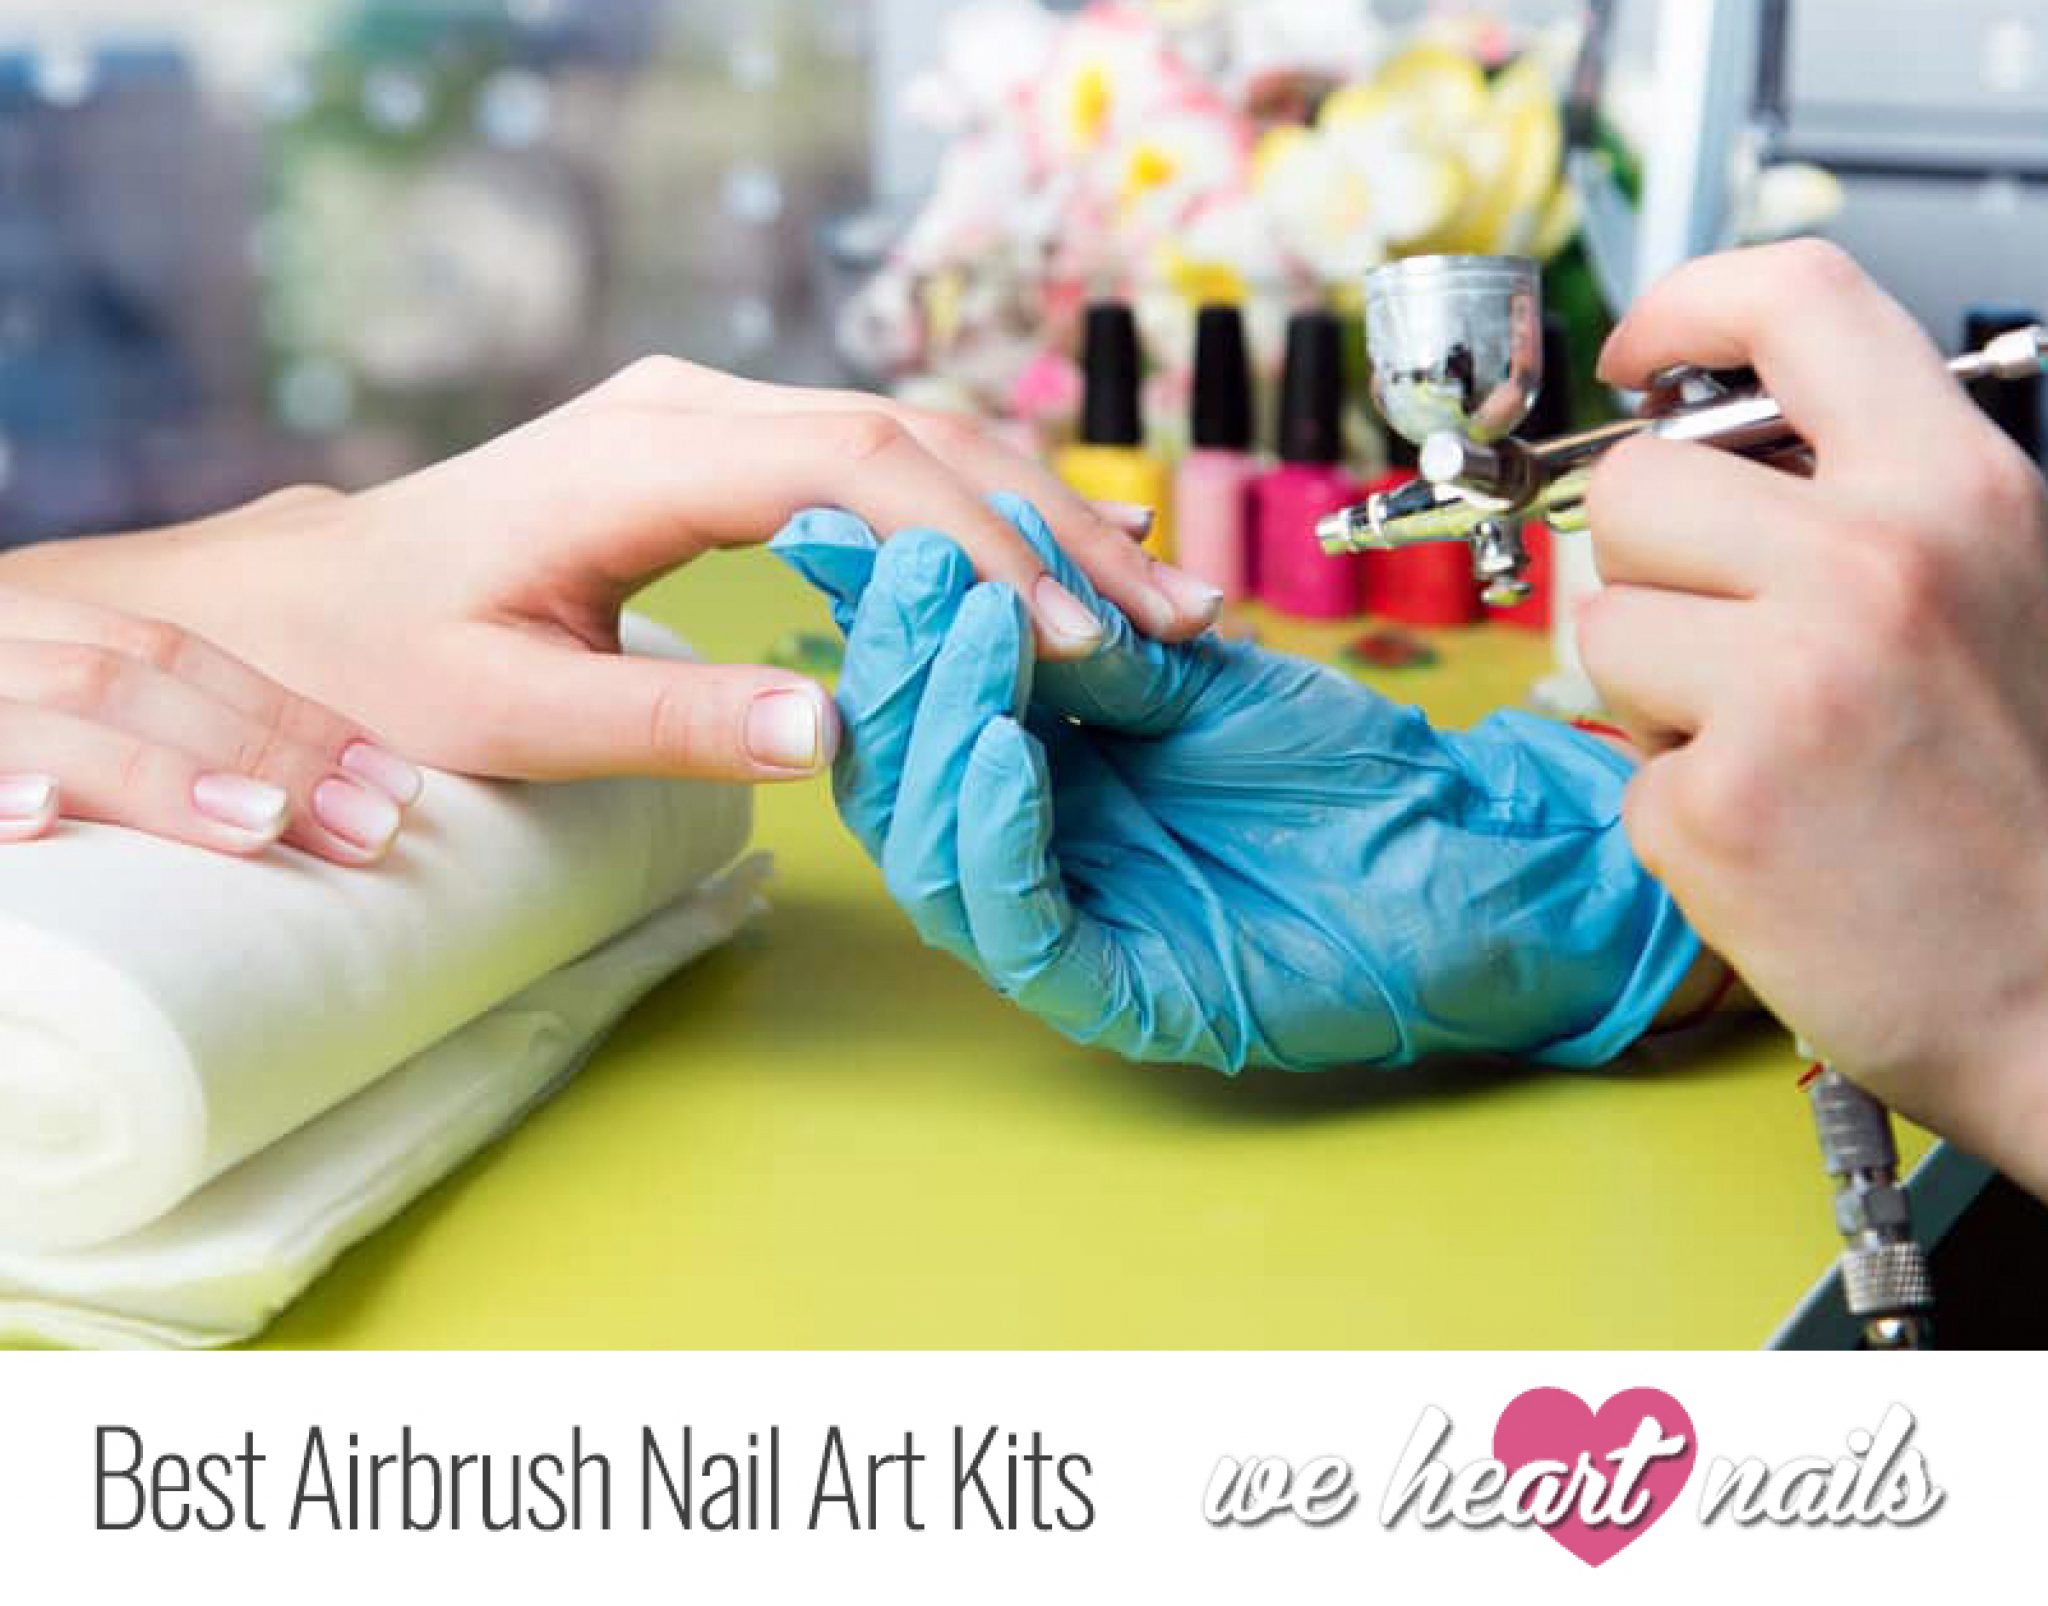 3. 2024 nail design ideas using airbrush - wide 4